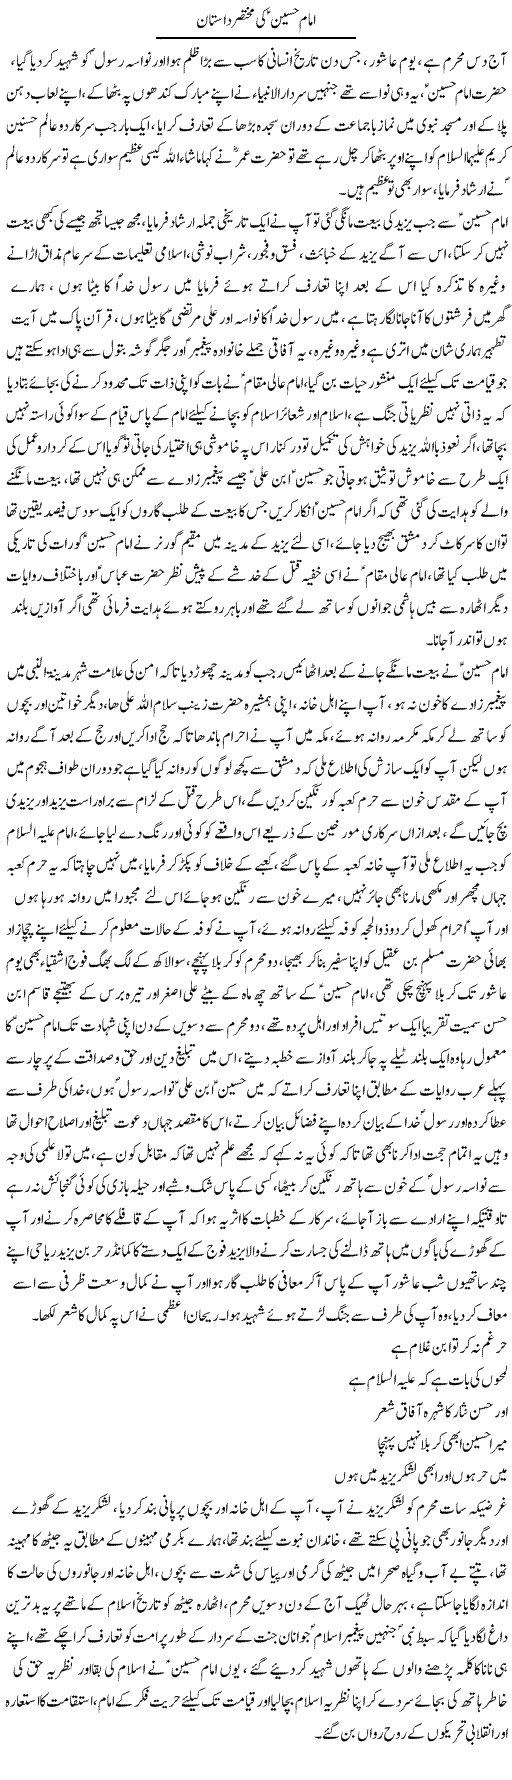 Imam Hussain Ki Mukhtasir Daastaan | Ali Raza Alvi | Daily Urdu Columns